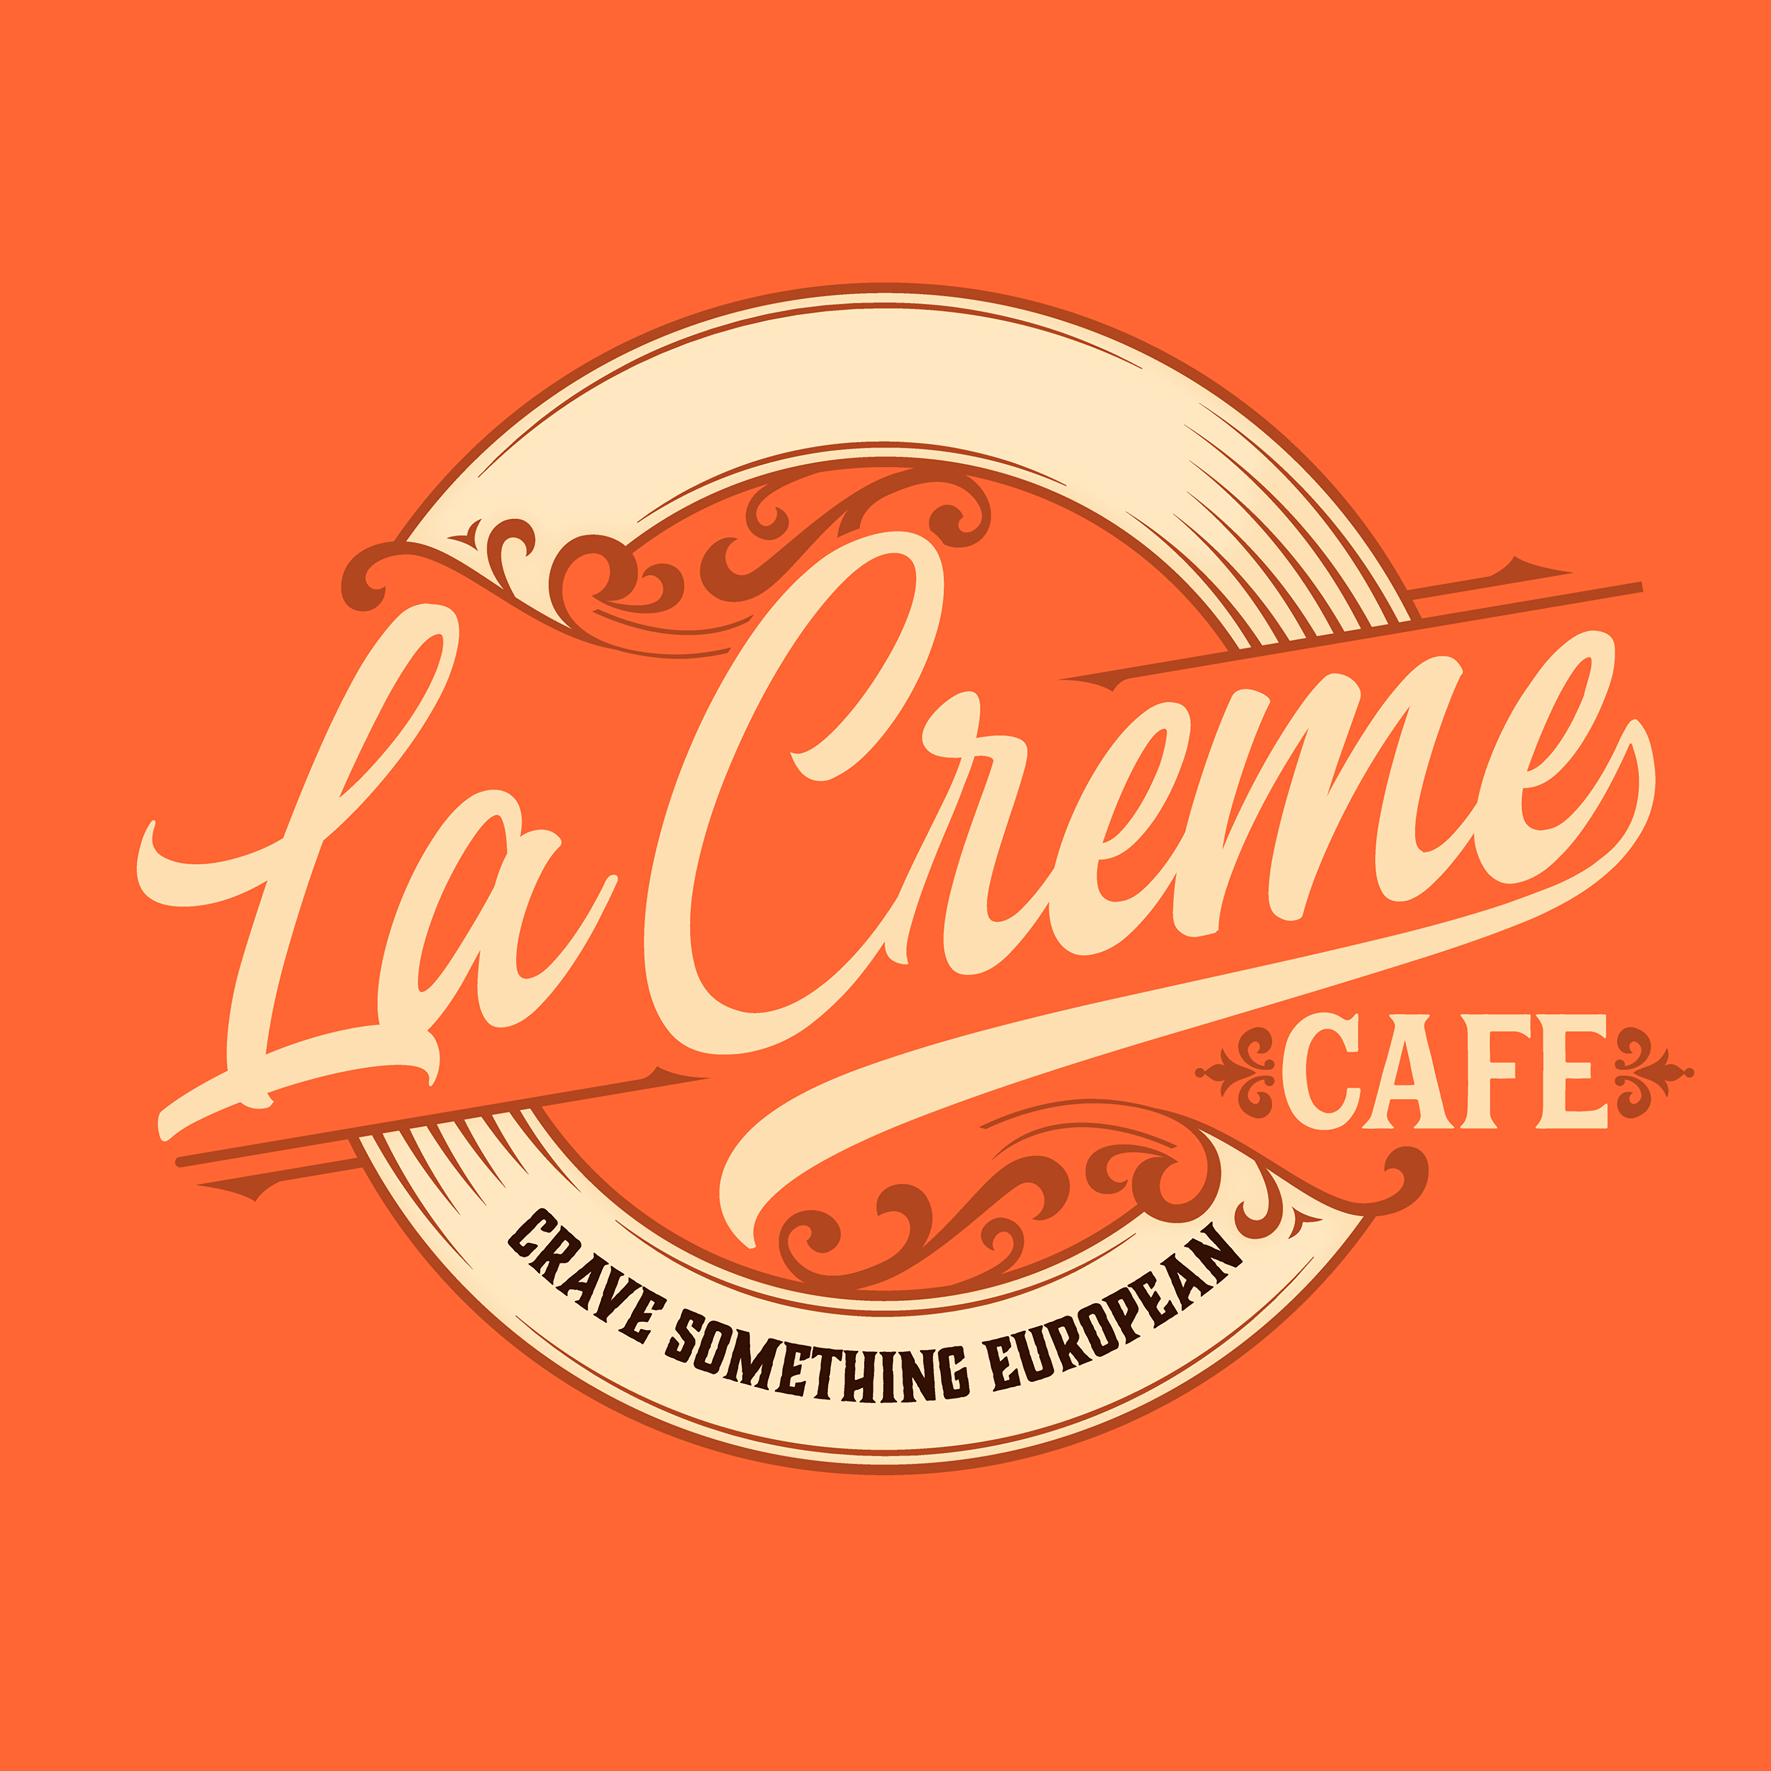 La Creme Cafe